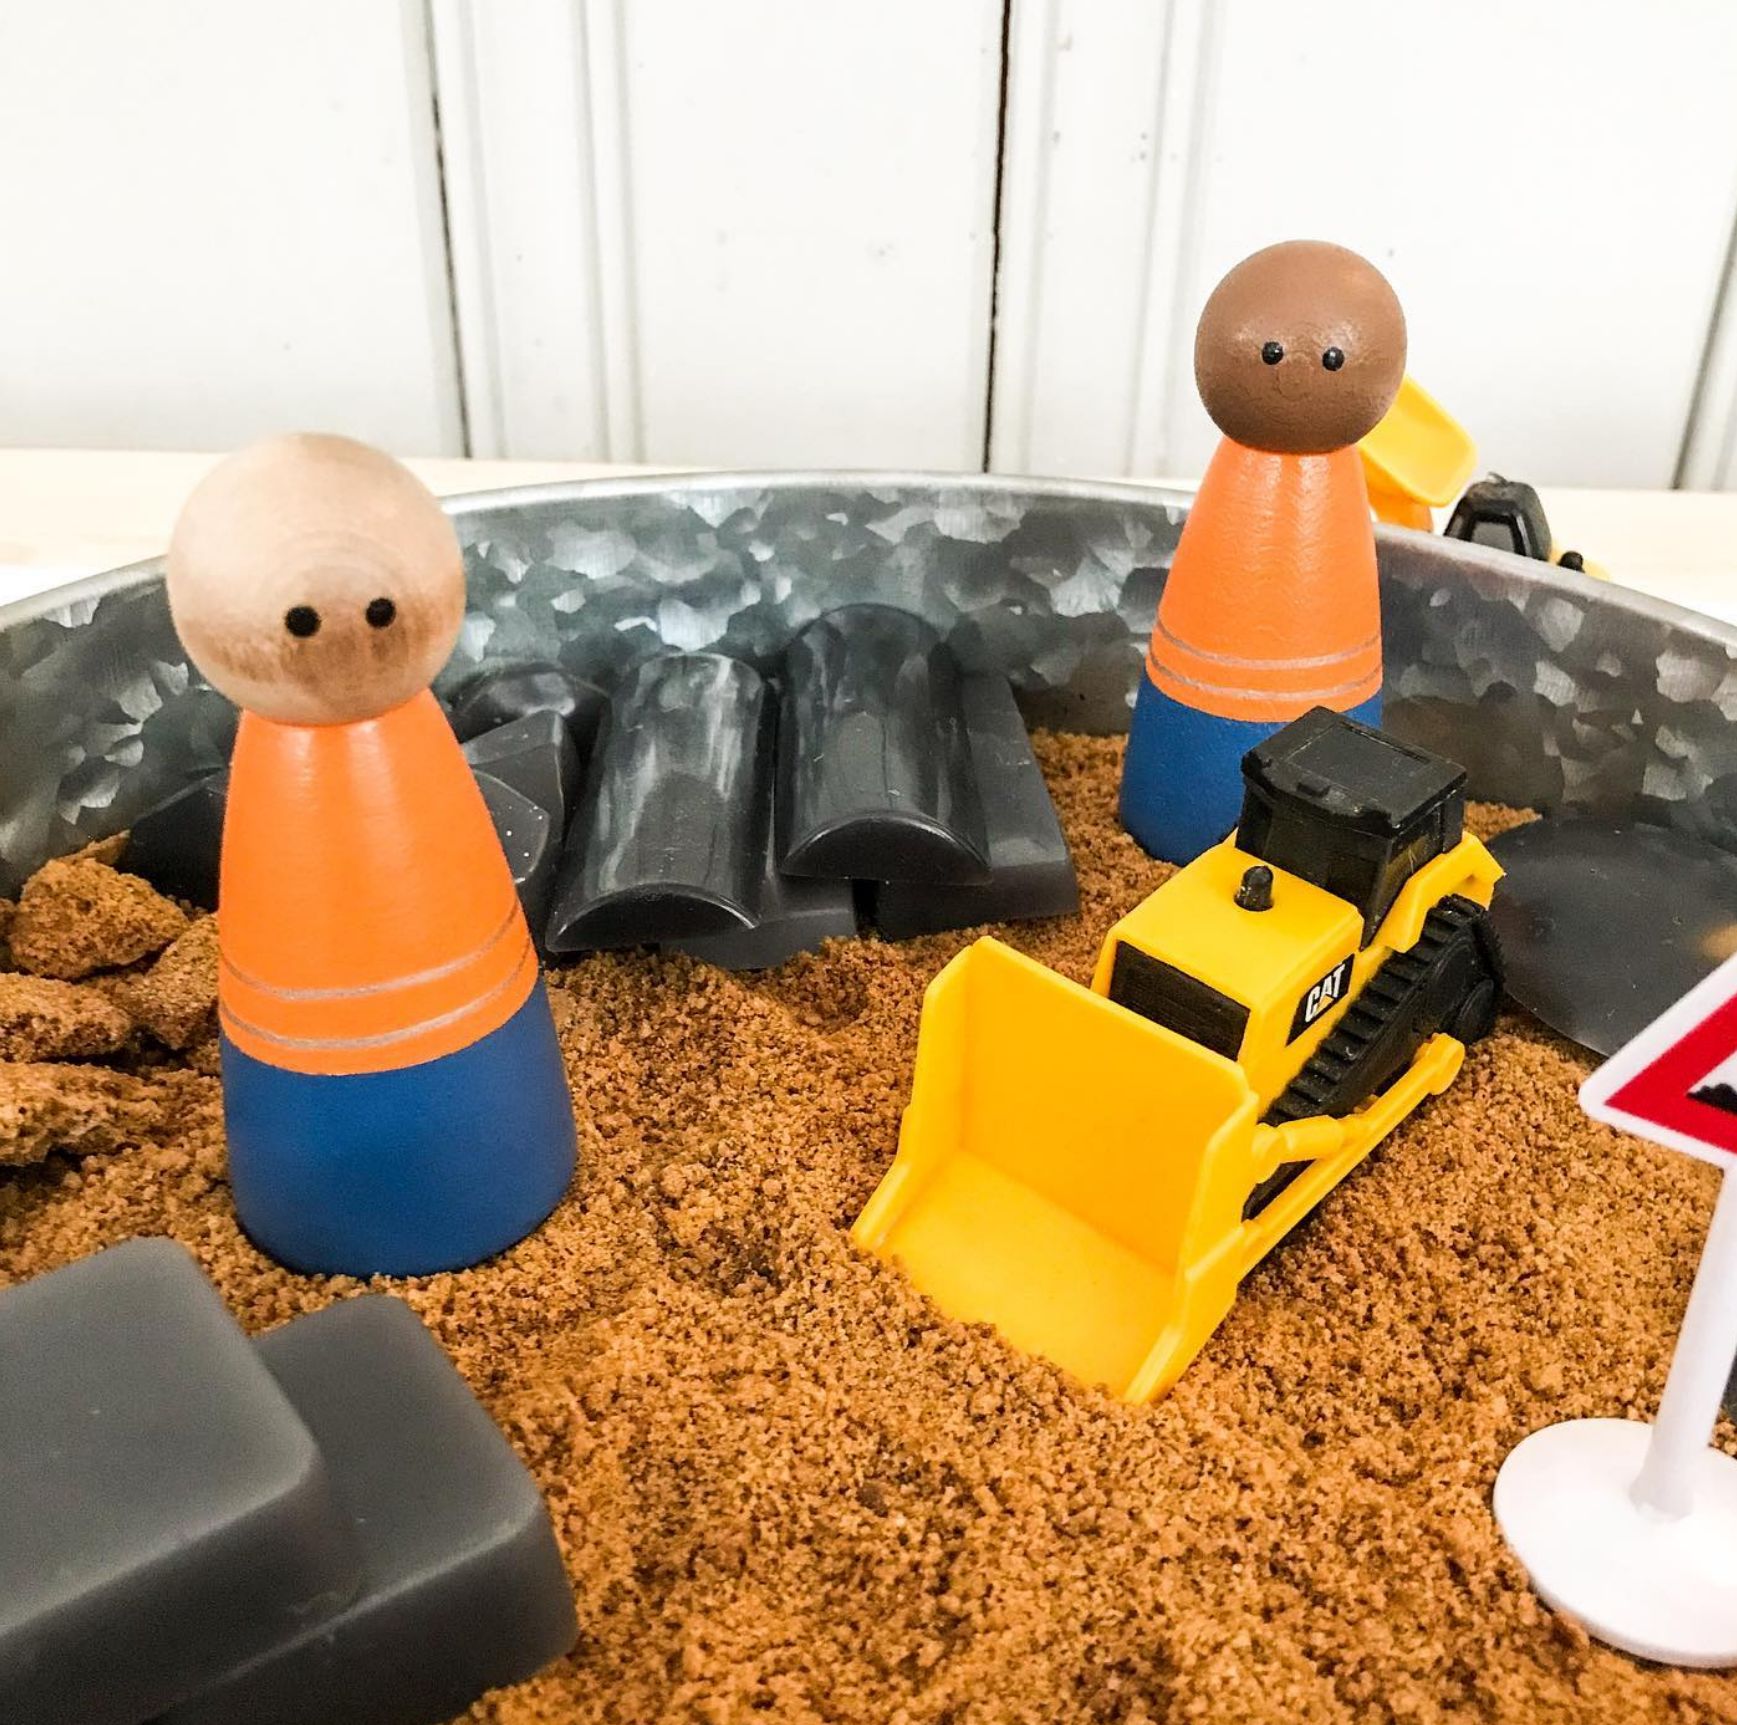  BUILD ME Tractor Sand Playset, Creativity Toy Sensory